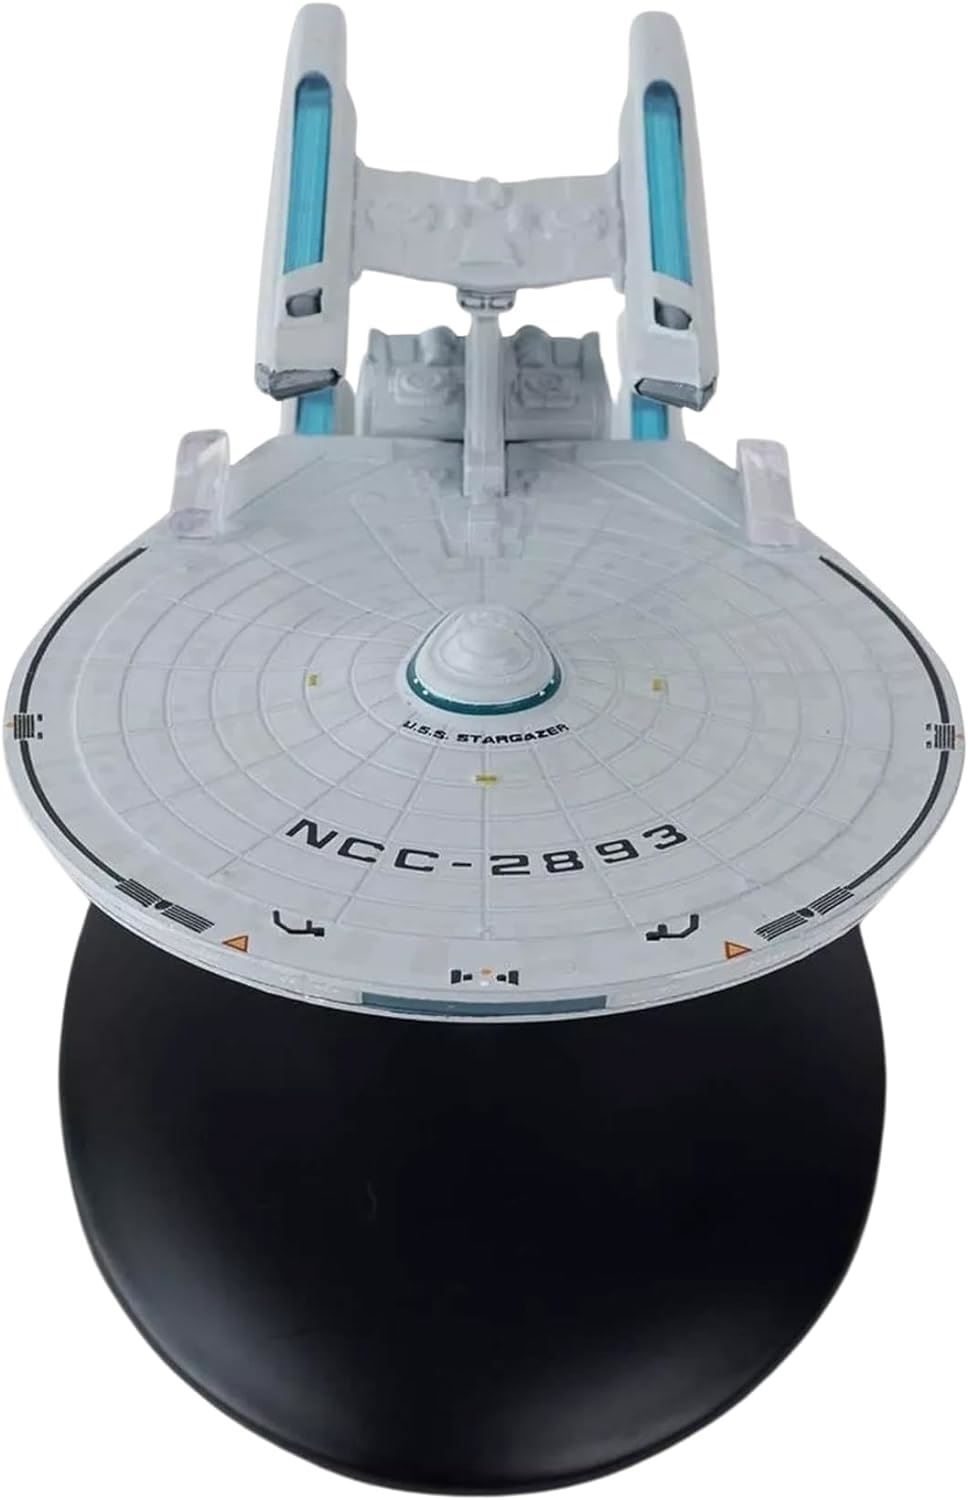 #19 U.S.S. Stargazer NCC-2893 (Constellation-class) CMC Diecast Model Ship (Eaglemoss / Star Trek)